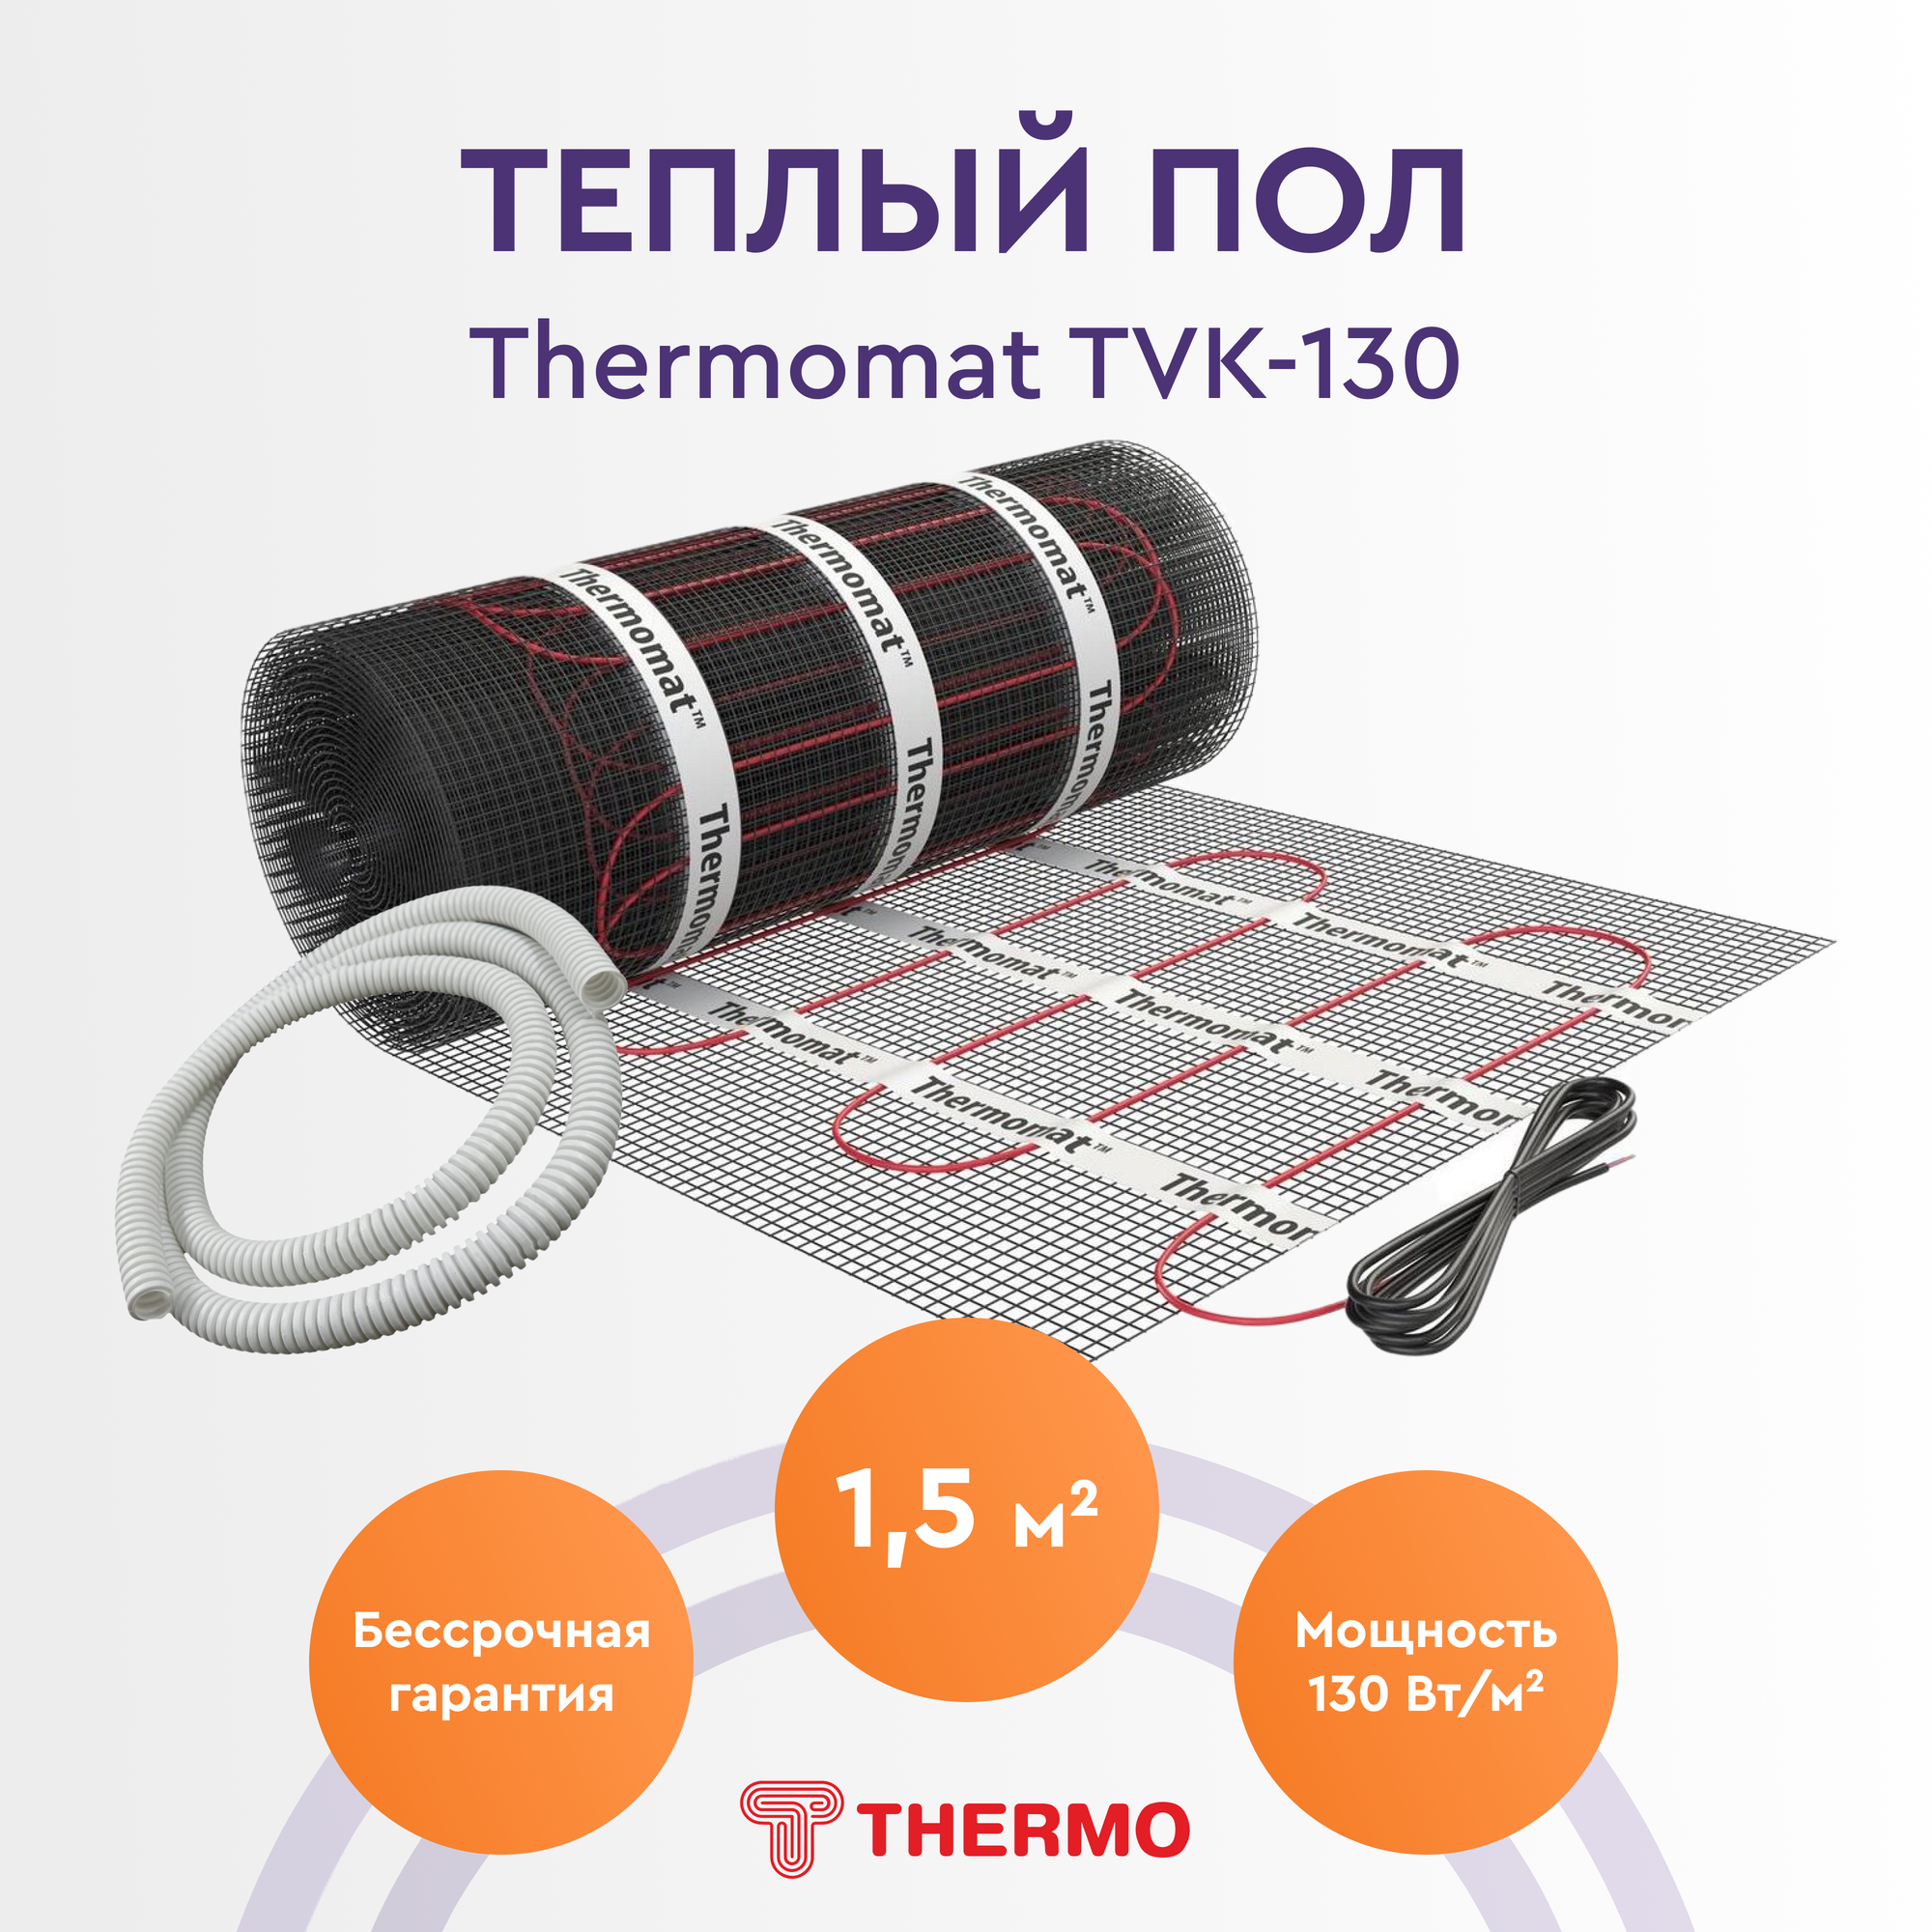 Теплый пол Thermo Thermomat TVK-130 1,5м. кв.